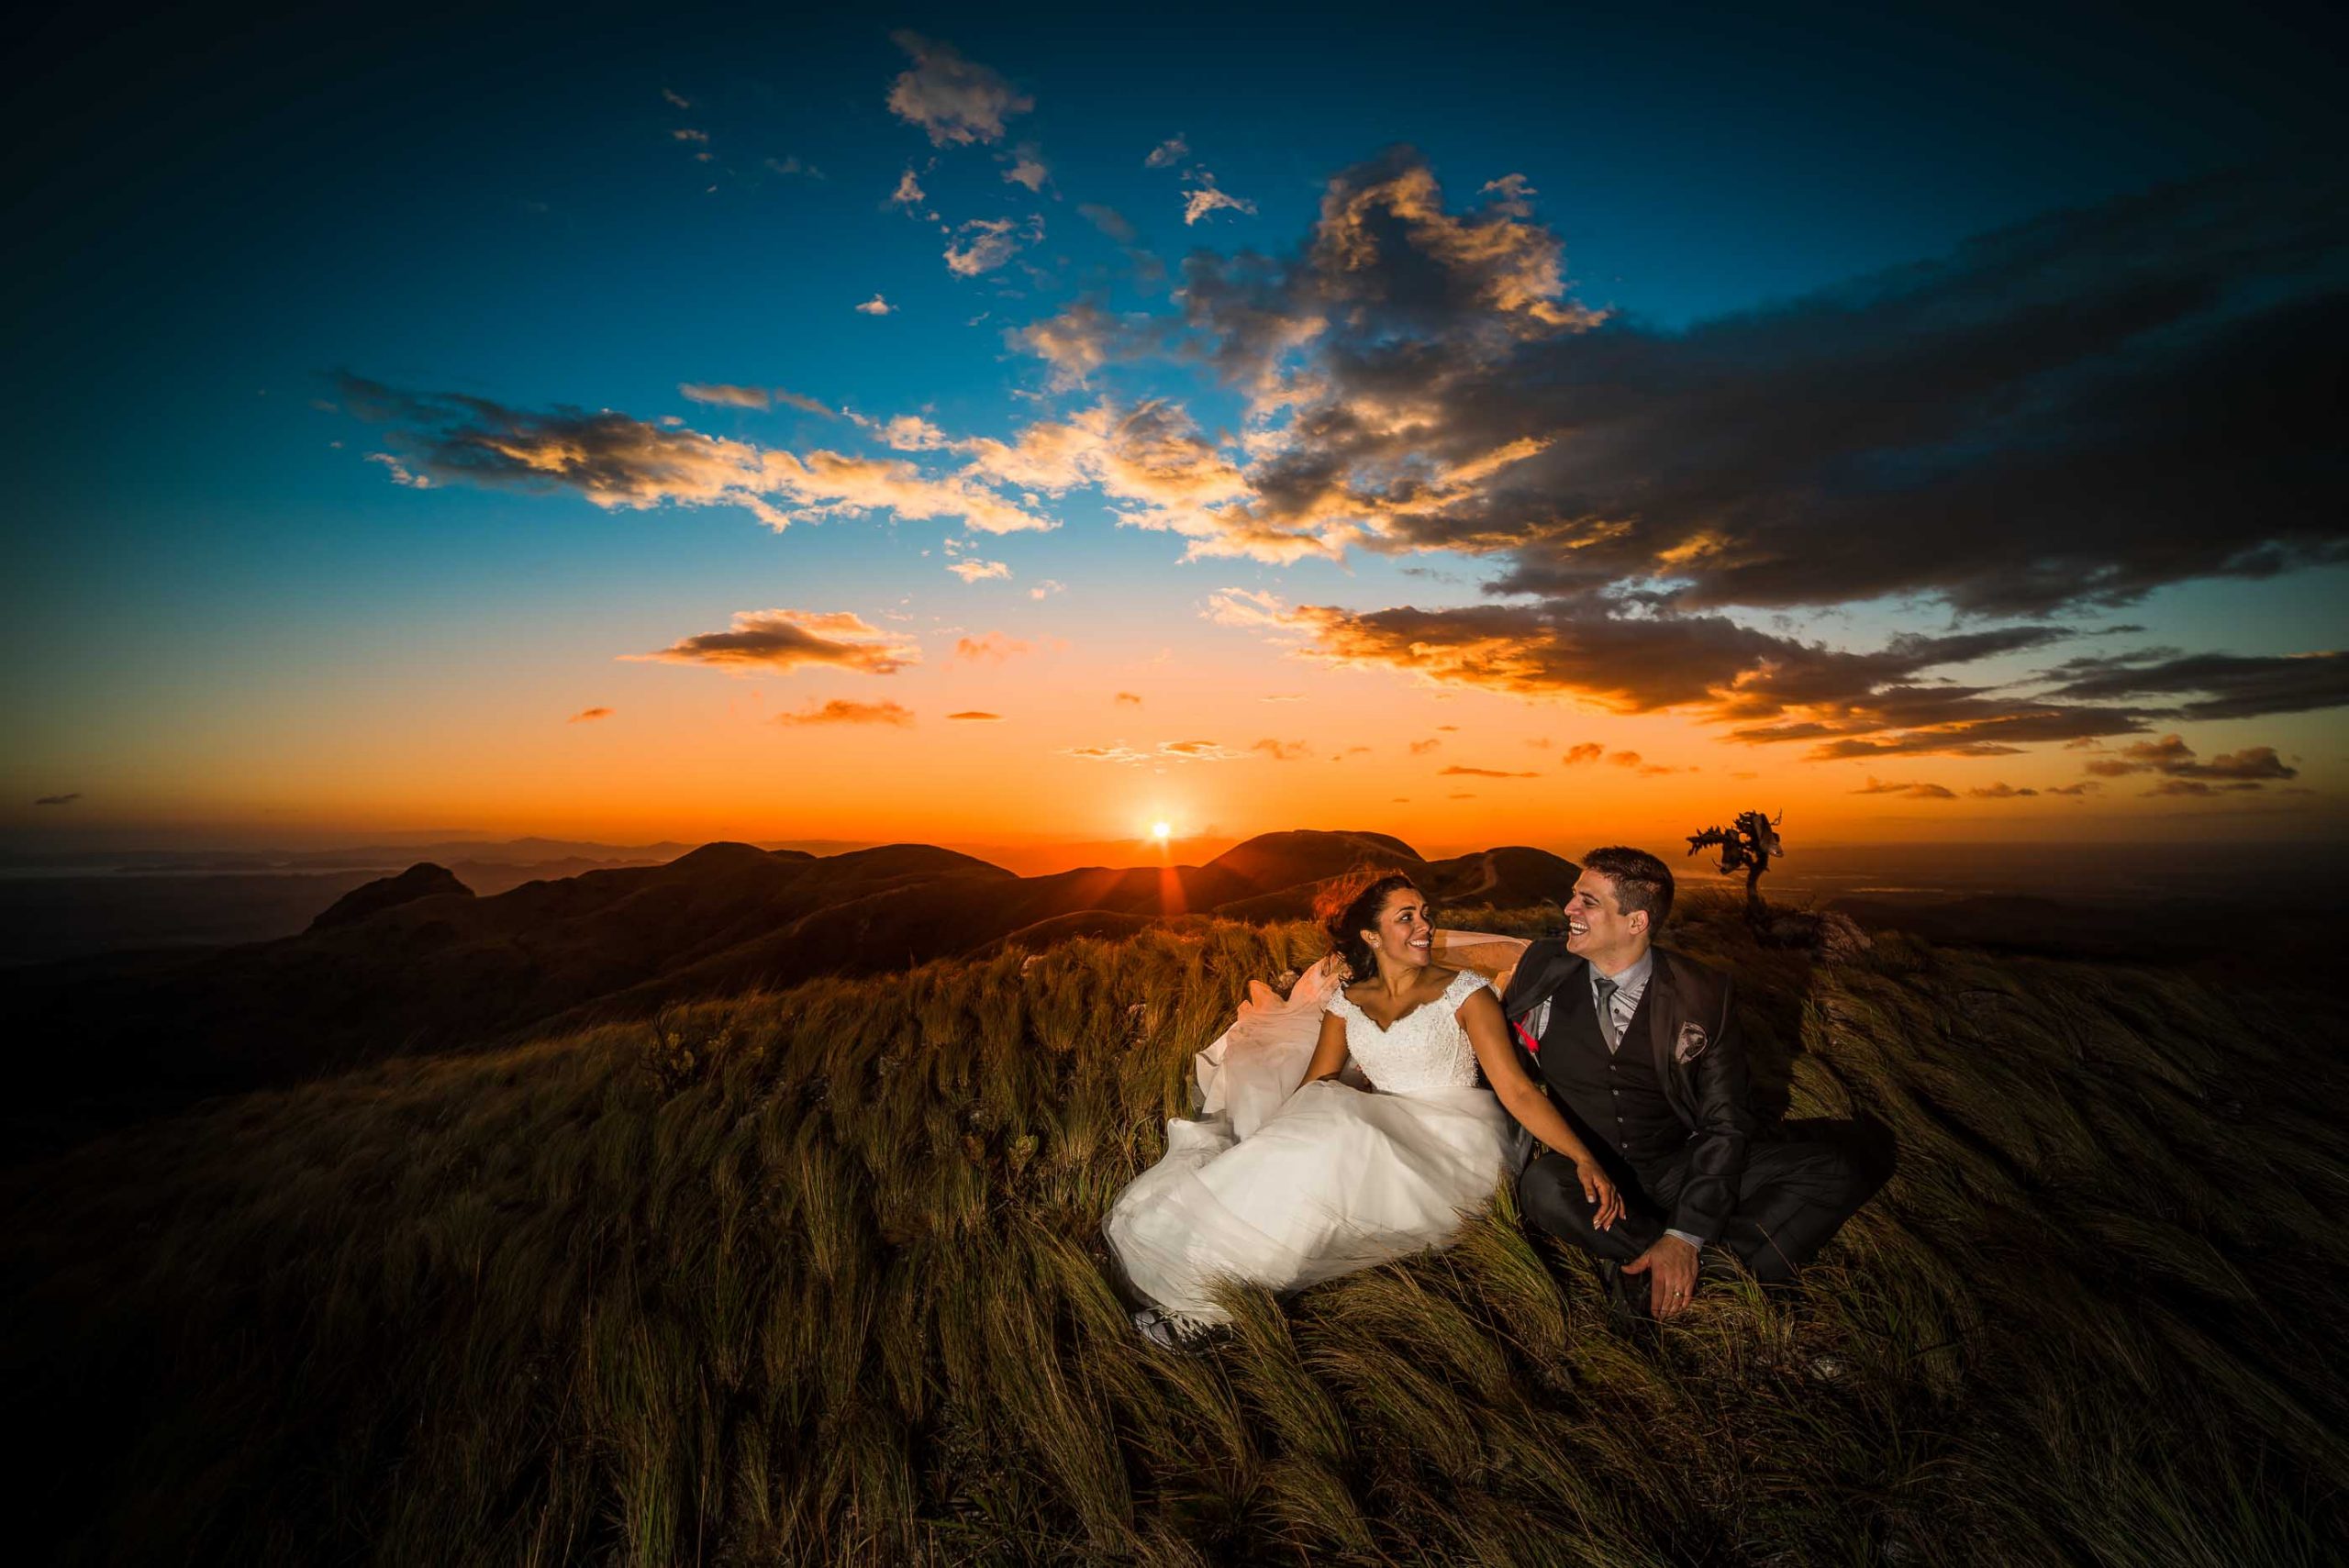 Costa Rica wedding photographer Jose Miguel Torres specialized in wedding photography in costa rica for destination weddings in costa rica